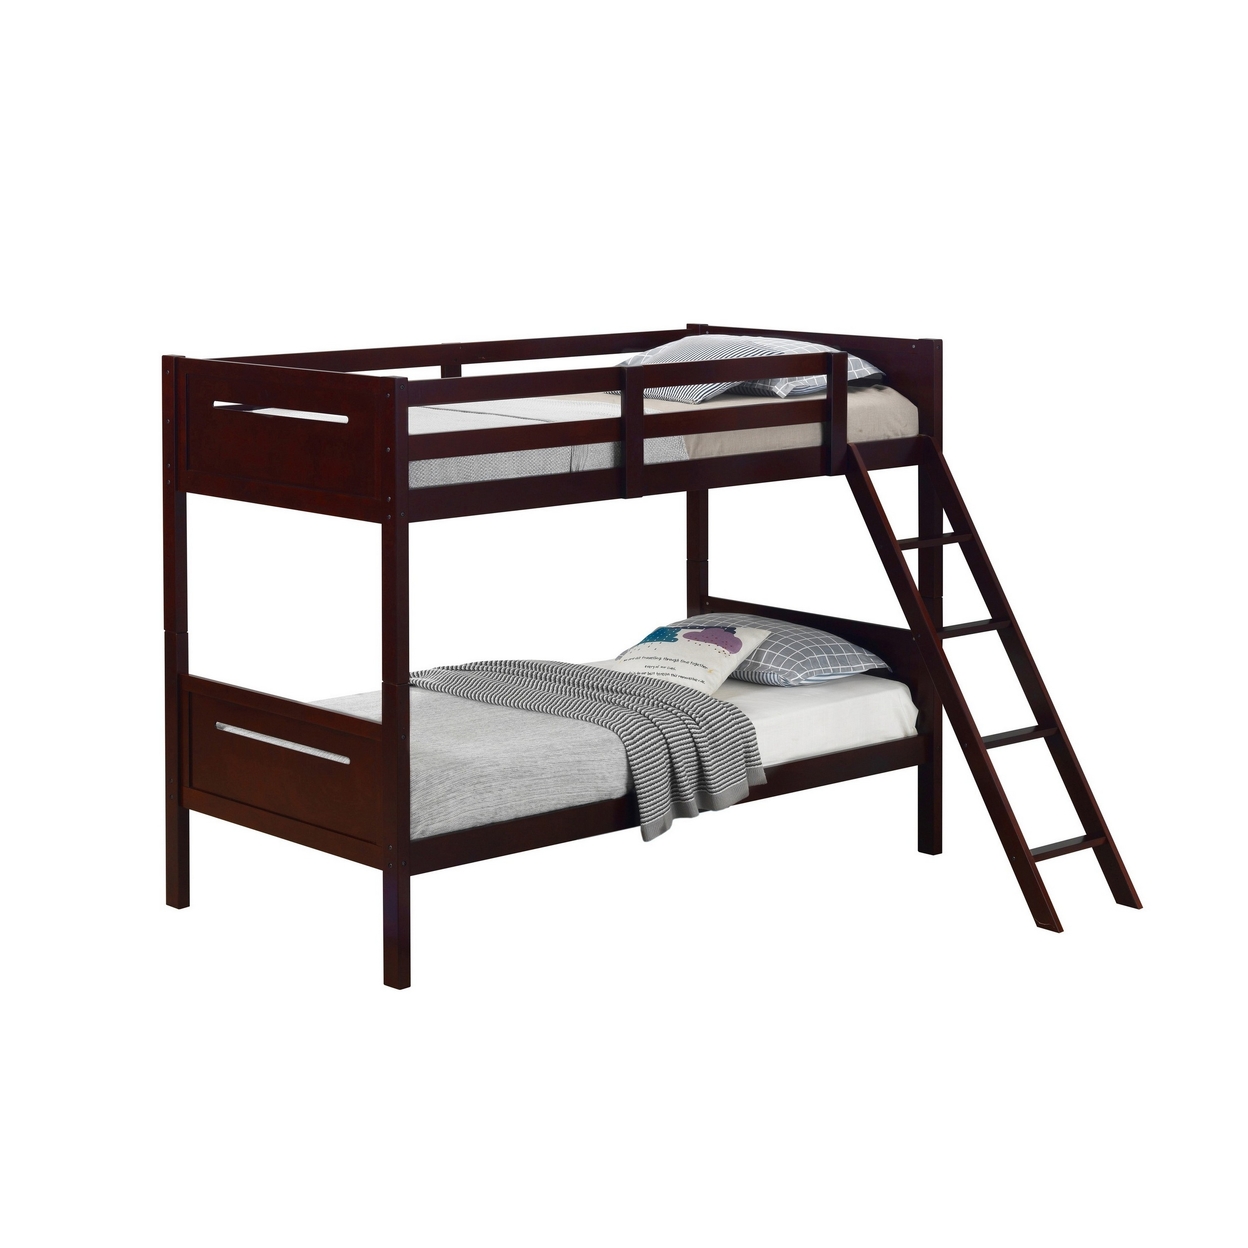 Amey Wood Twin Bunk Bed With Angled Ladder, Guardrail, Slat Kit, Brown- Saltoro Sherpi